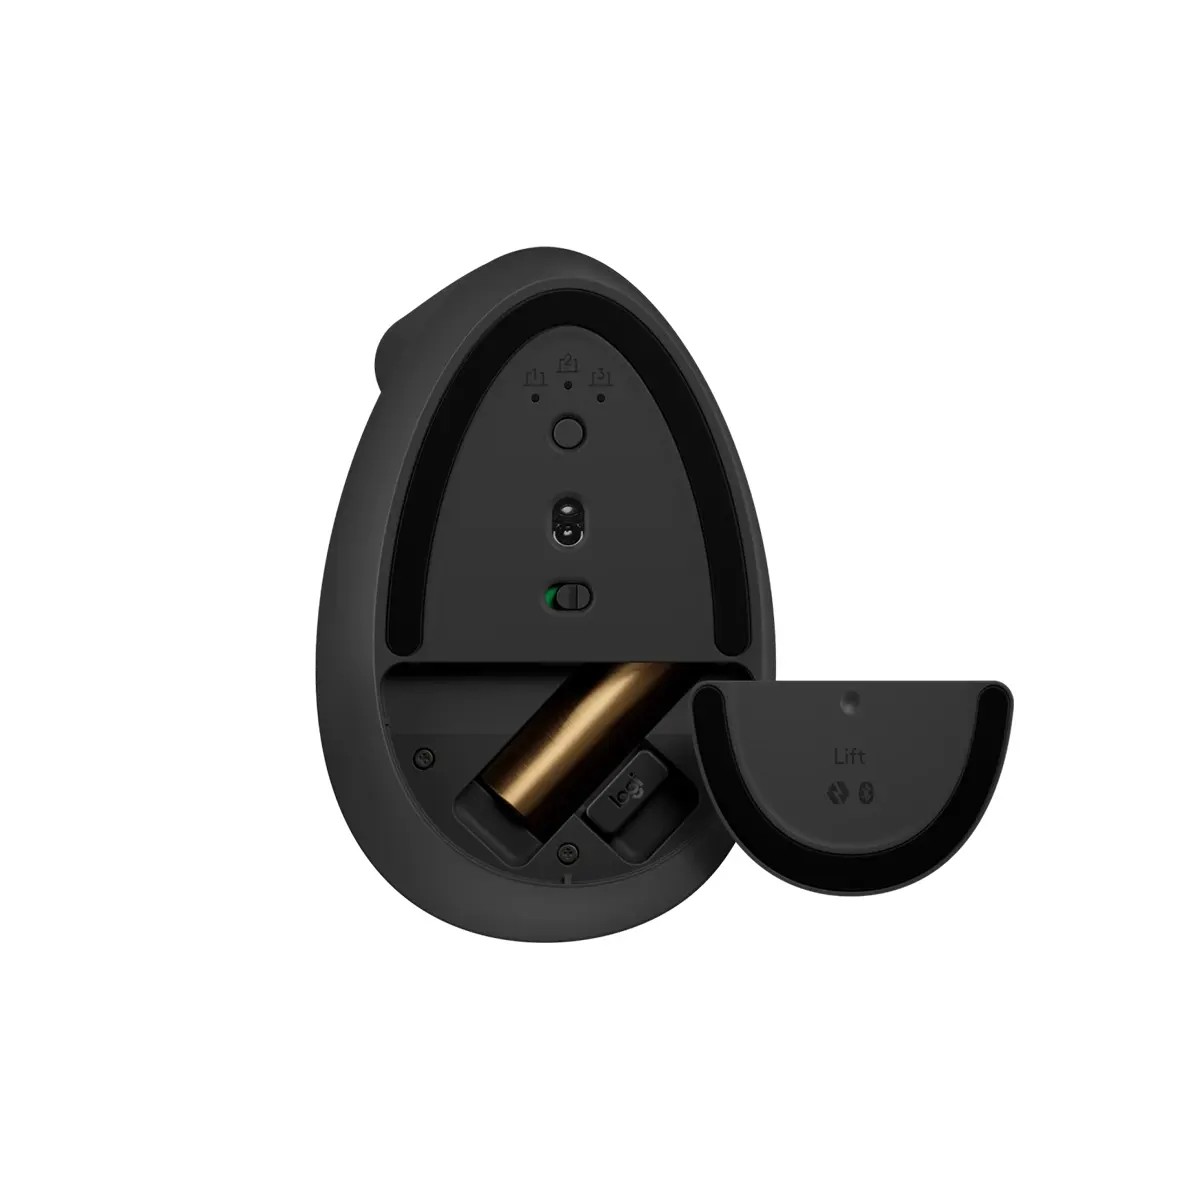 موس عمودی بی سیم لاجیتک مدل Logitech Lift Vertical Ergonomic Wireless Mouse رنگ مشکی (5)